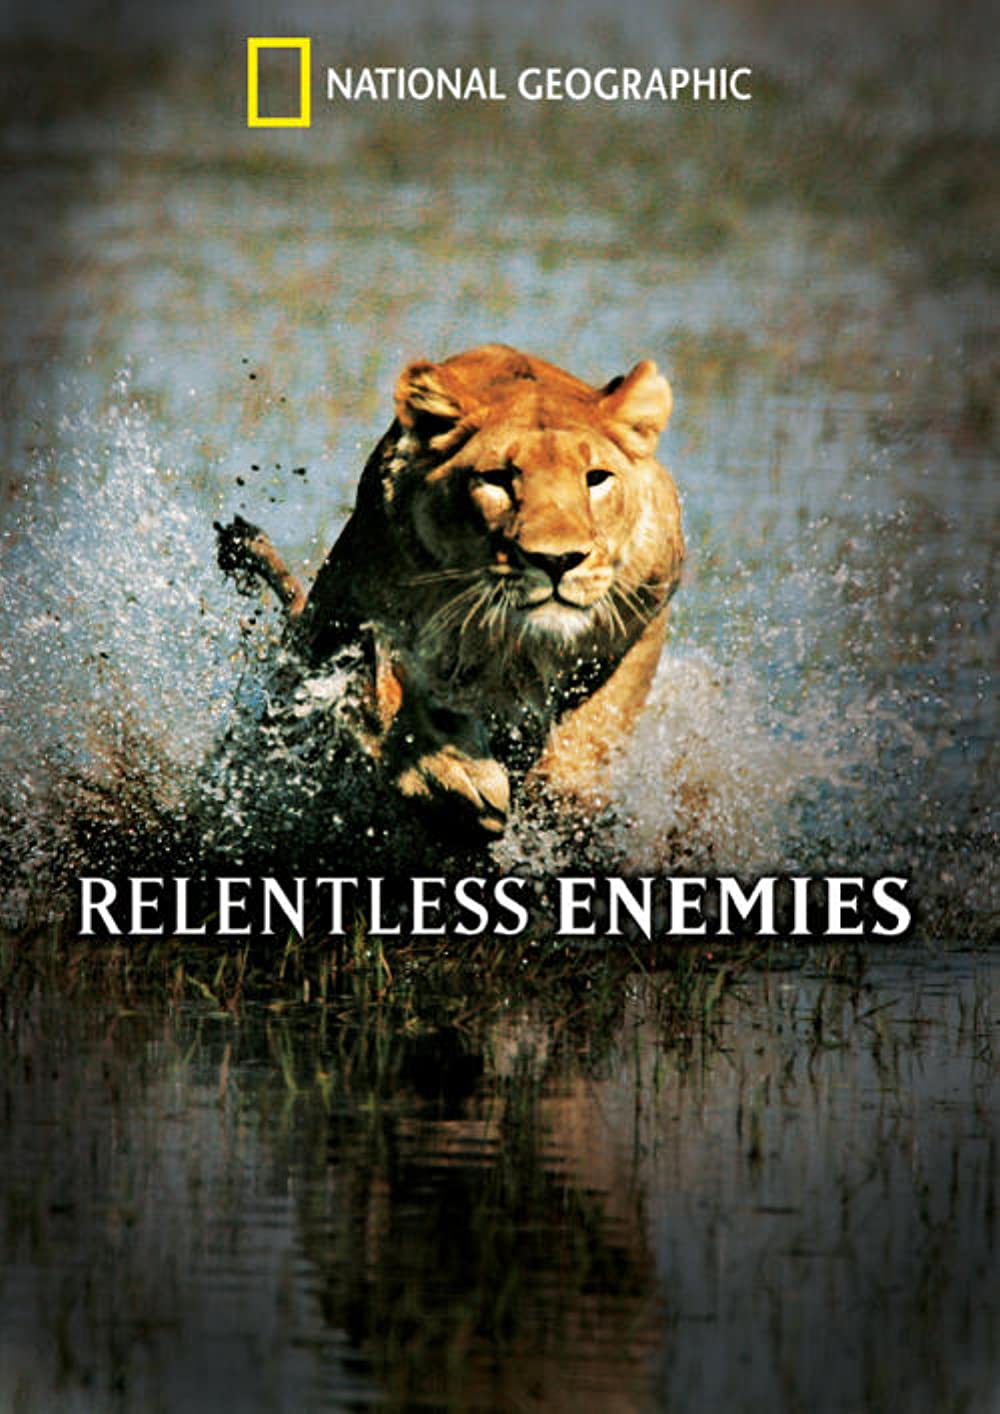 Download Relentless Enemies Movie | Relentless Enemies Dvd